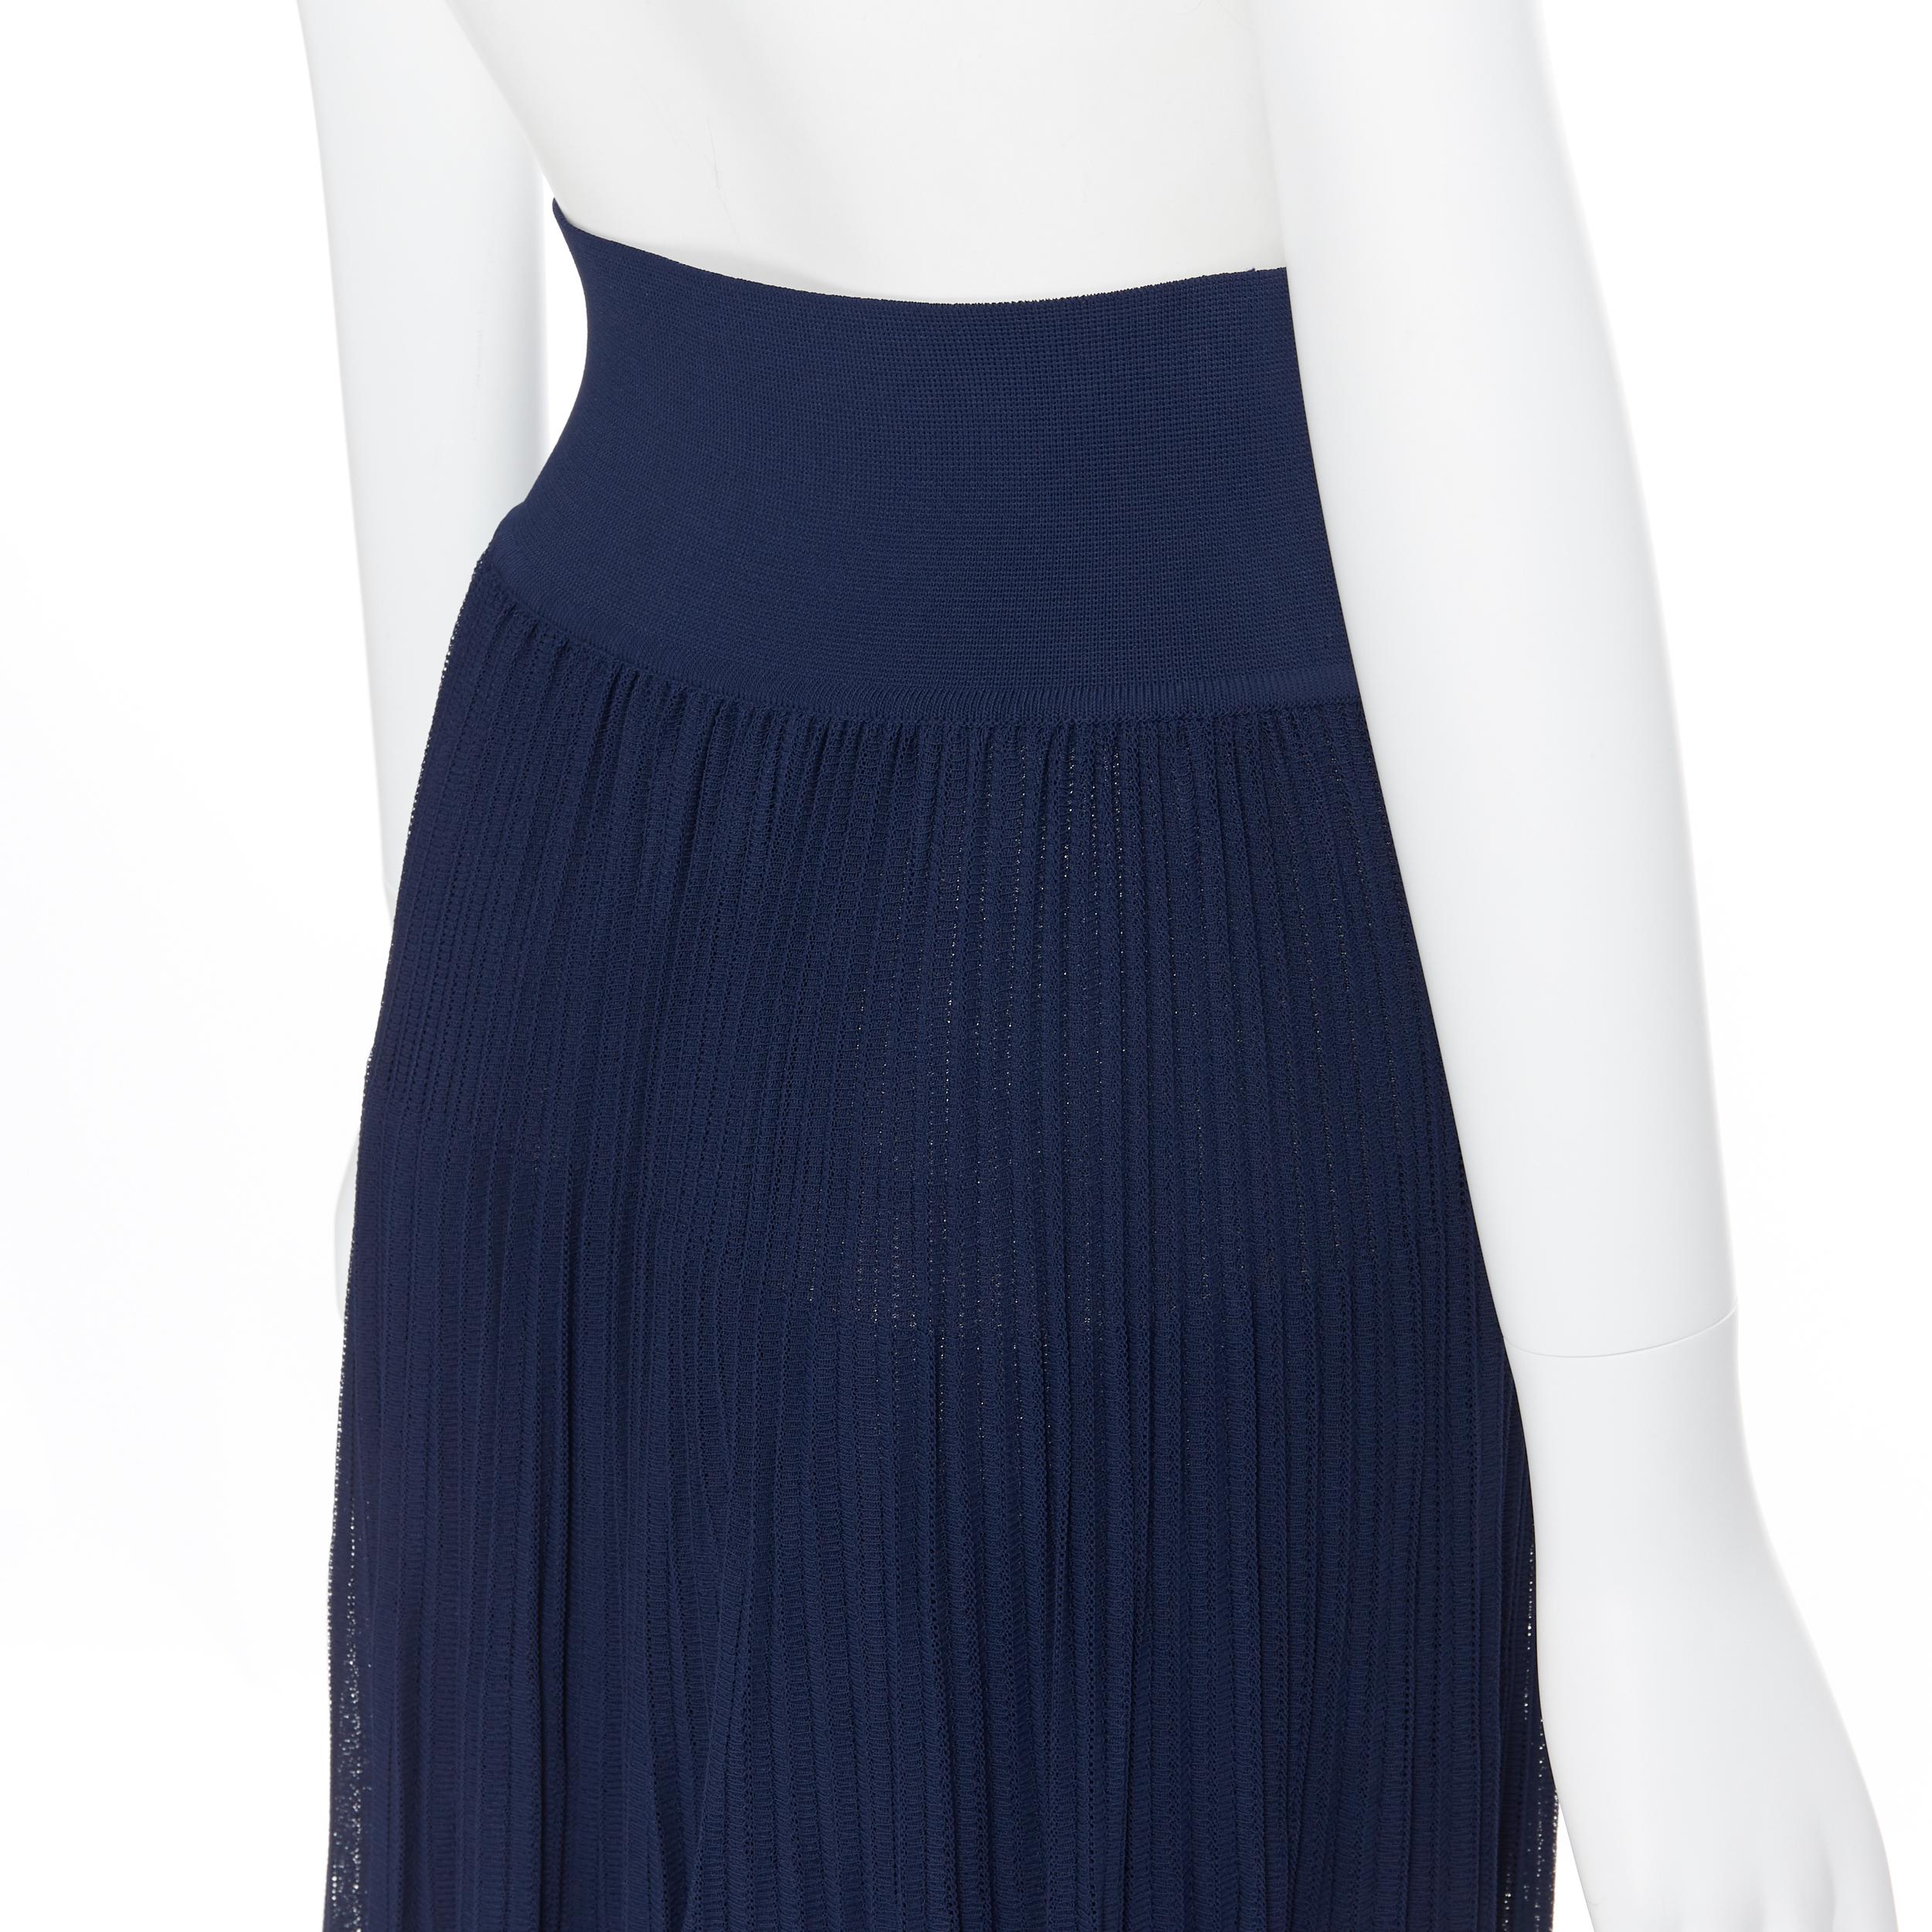 Women's RALPH LAUREN PURPLE LABEL navy blue viscose knit cut out pleated skirt gown US4